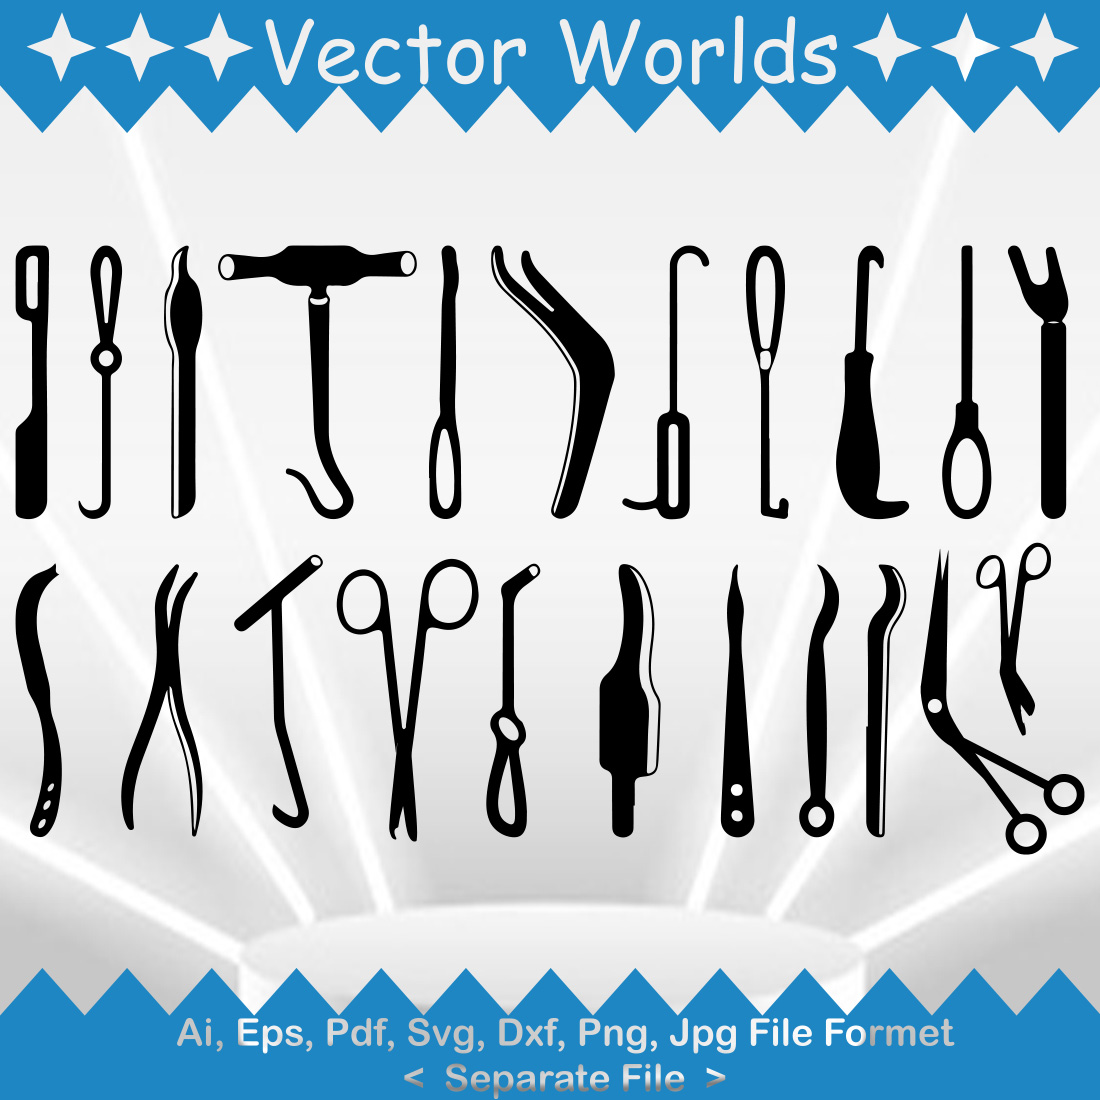 Bone Lever SVG Vector Design cover image.